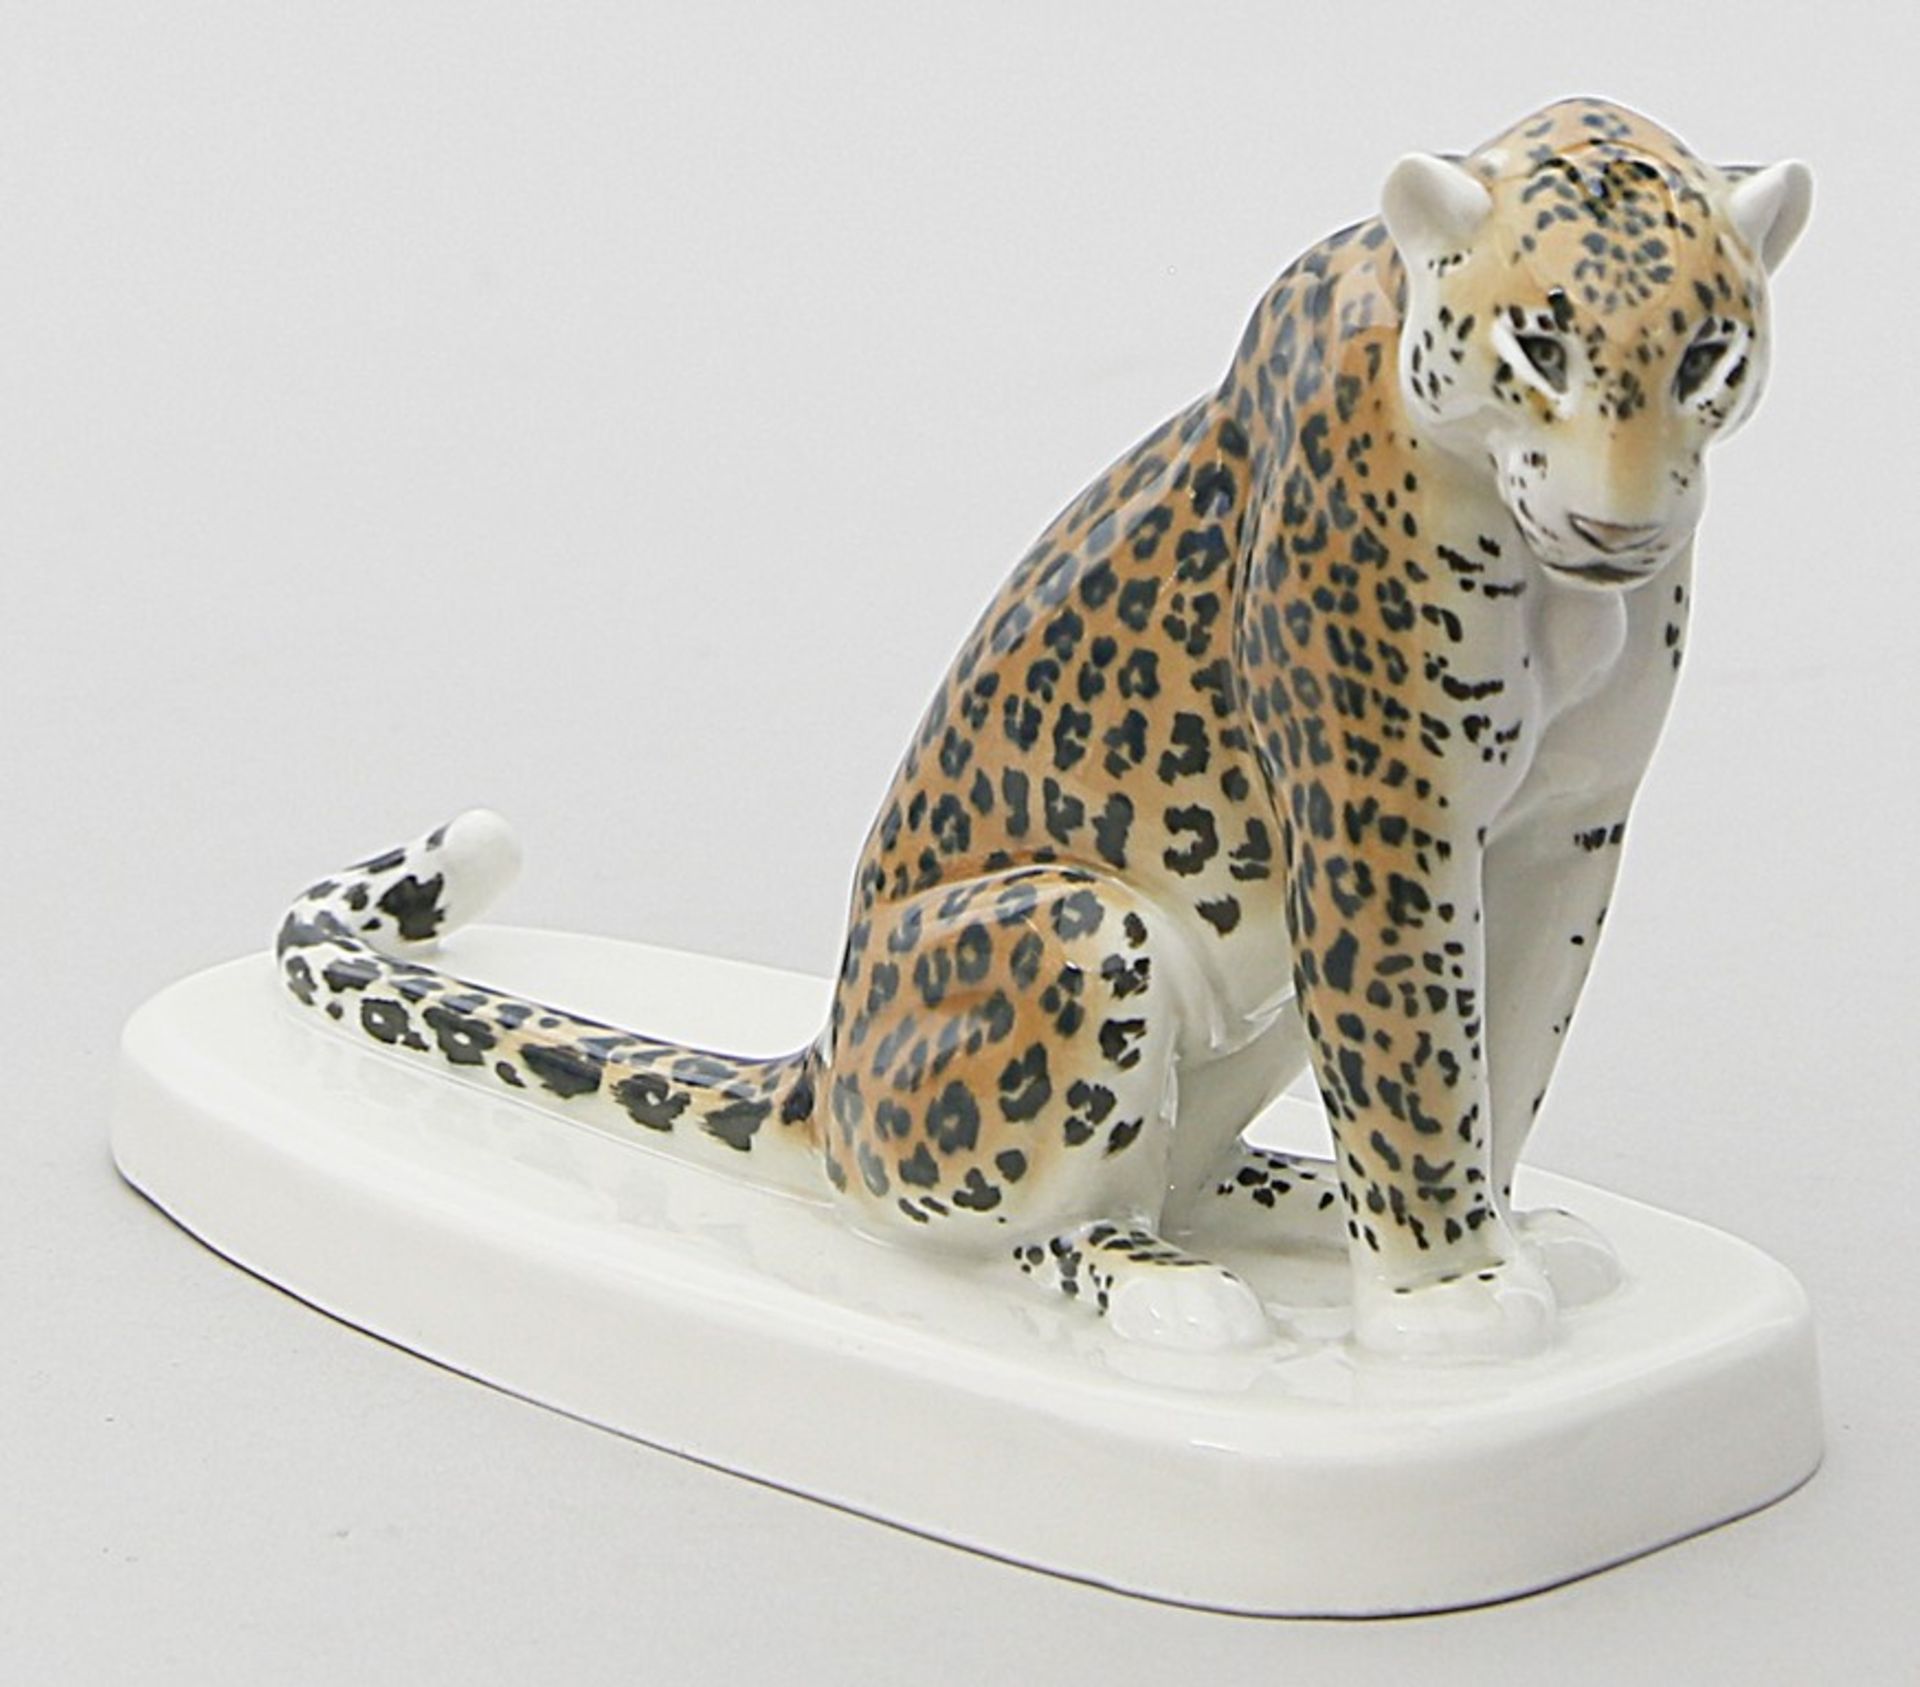 Löhner, Rudolf (1890 Zlaté Hory - Dresden 1971) "Leopard". Porzellan mit naturalisti